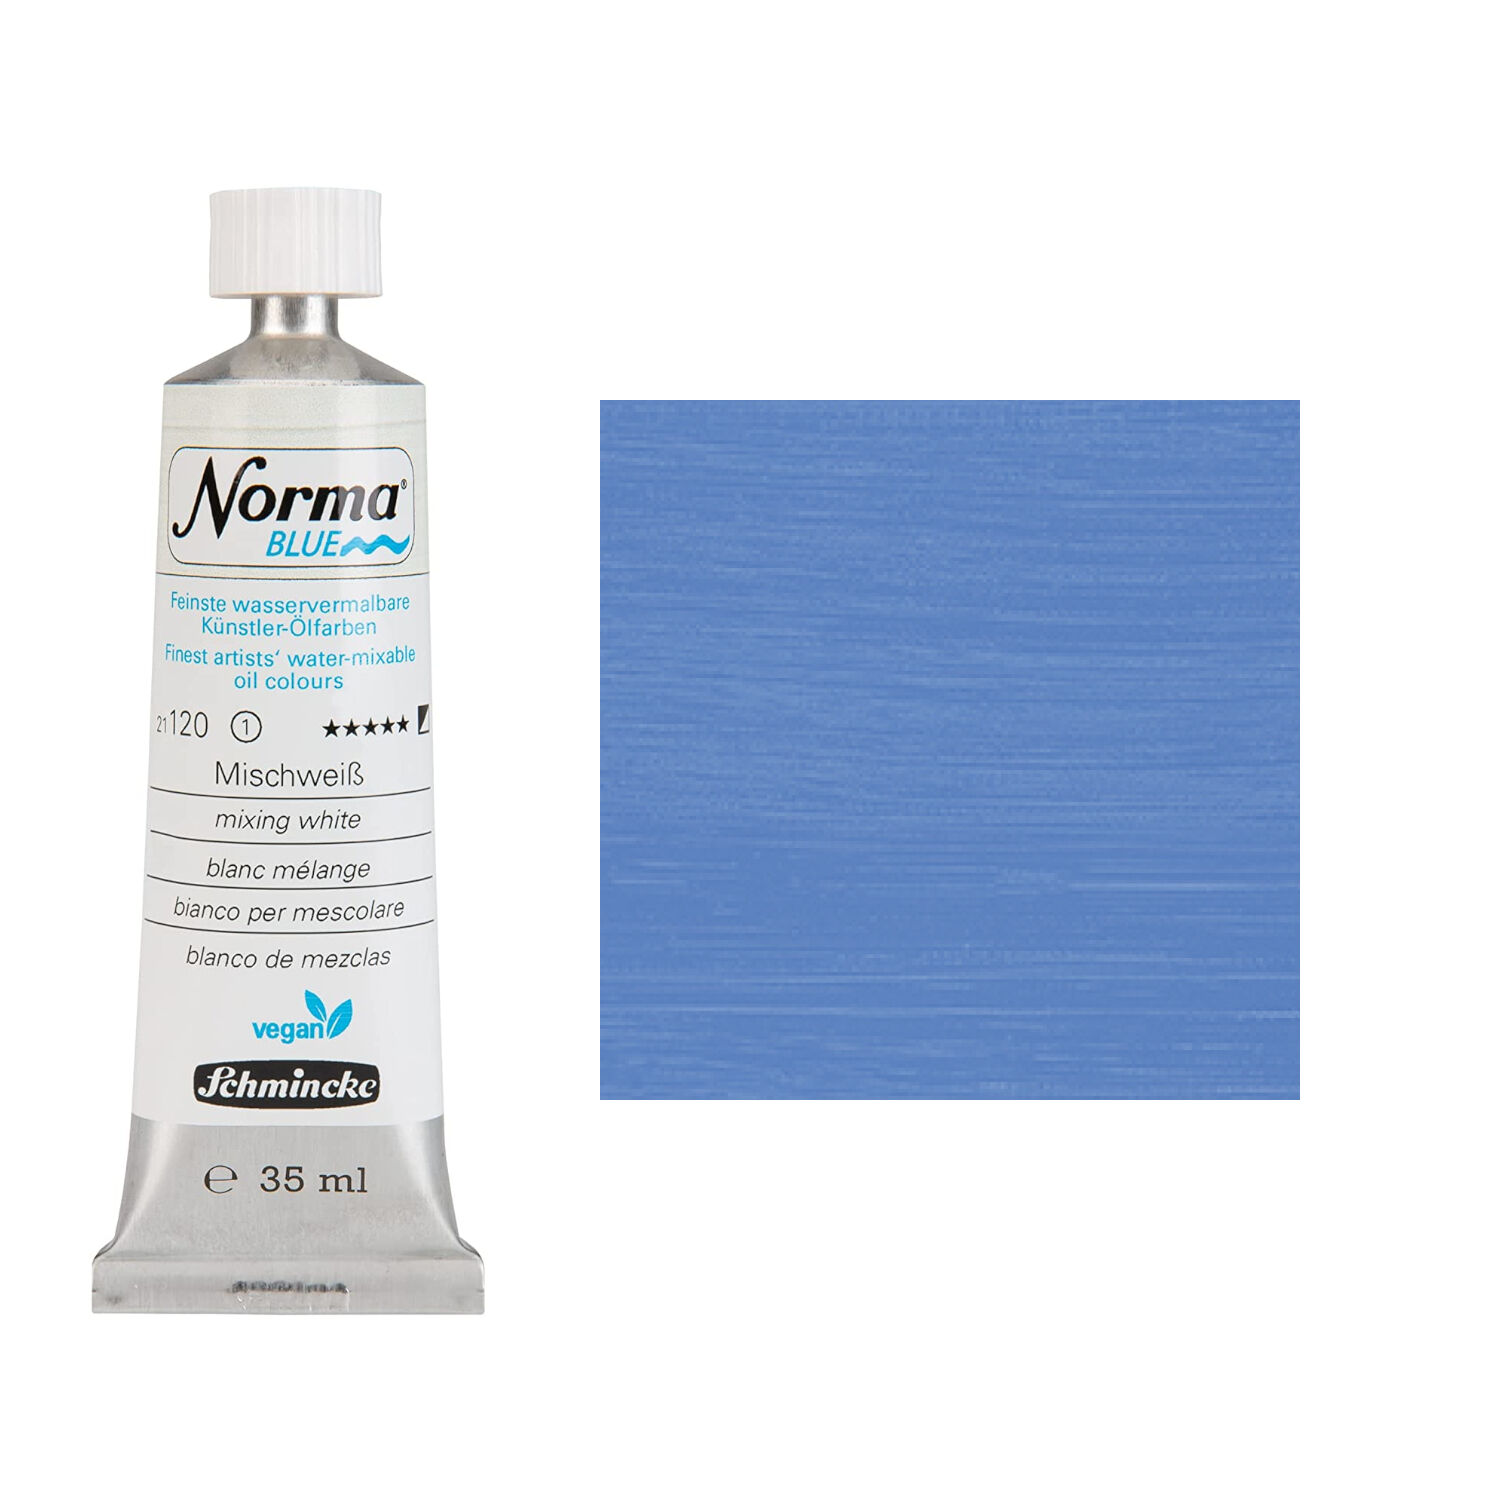 NEU Schmincke Norma BLUE, wasservermalbare lfarbe, 35 ml, Knigsblau